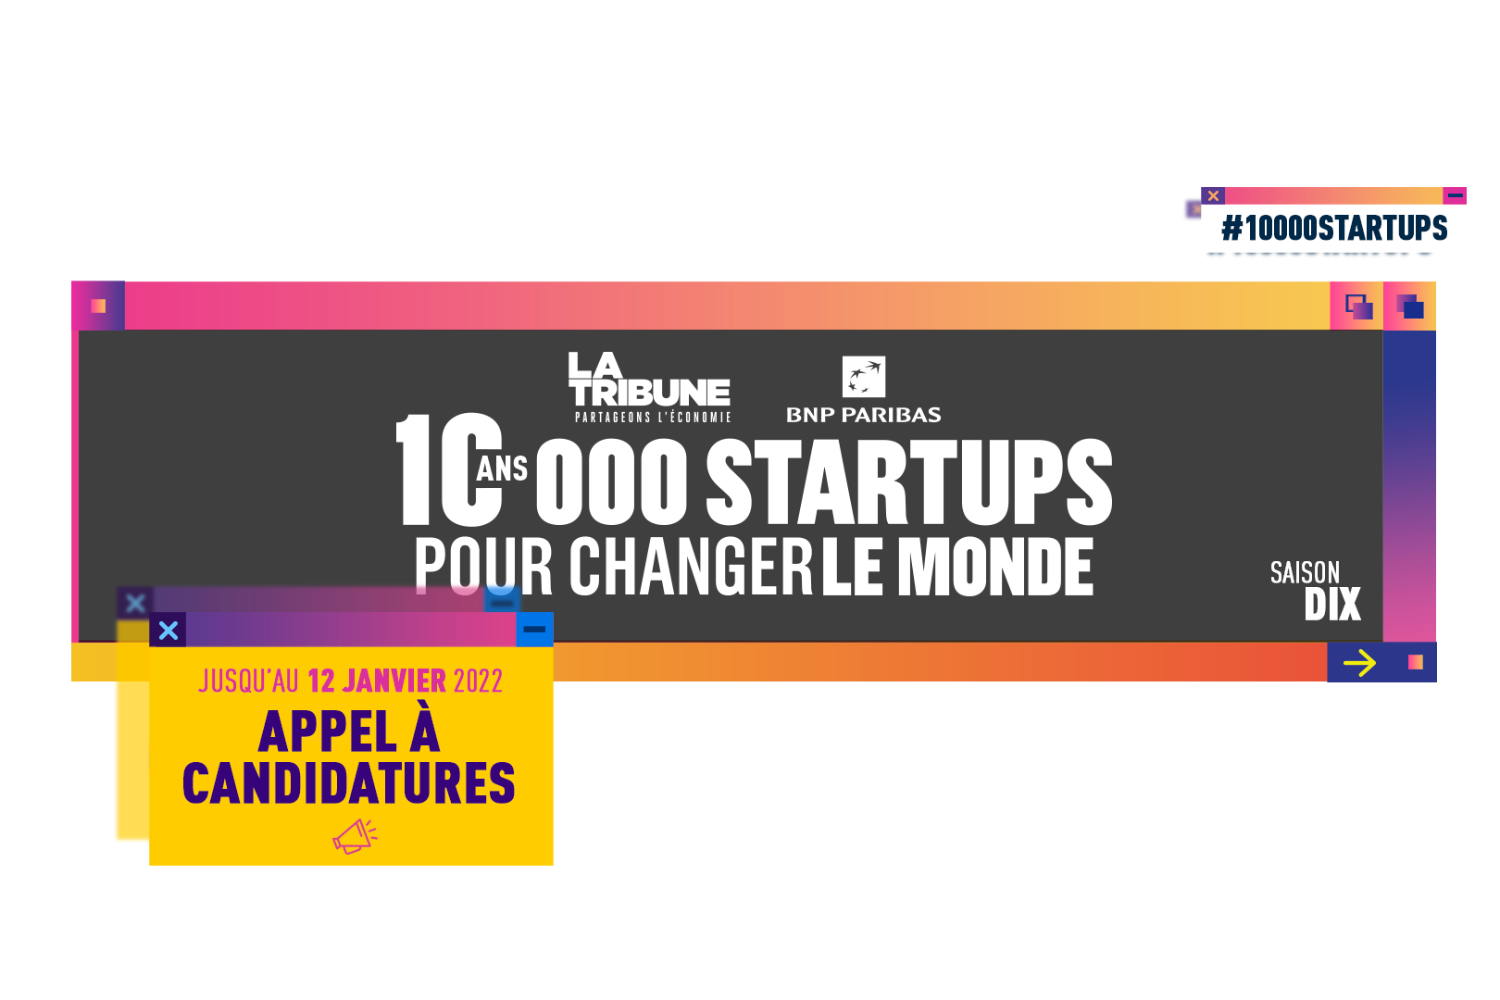 La Tribune - 10'000 startups to change the world 